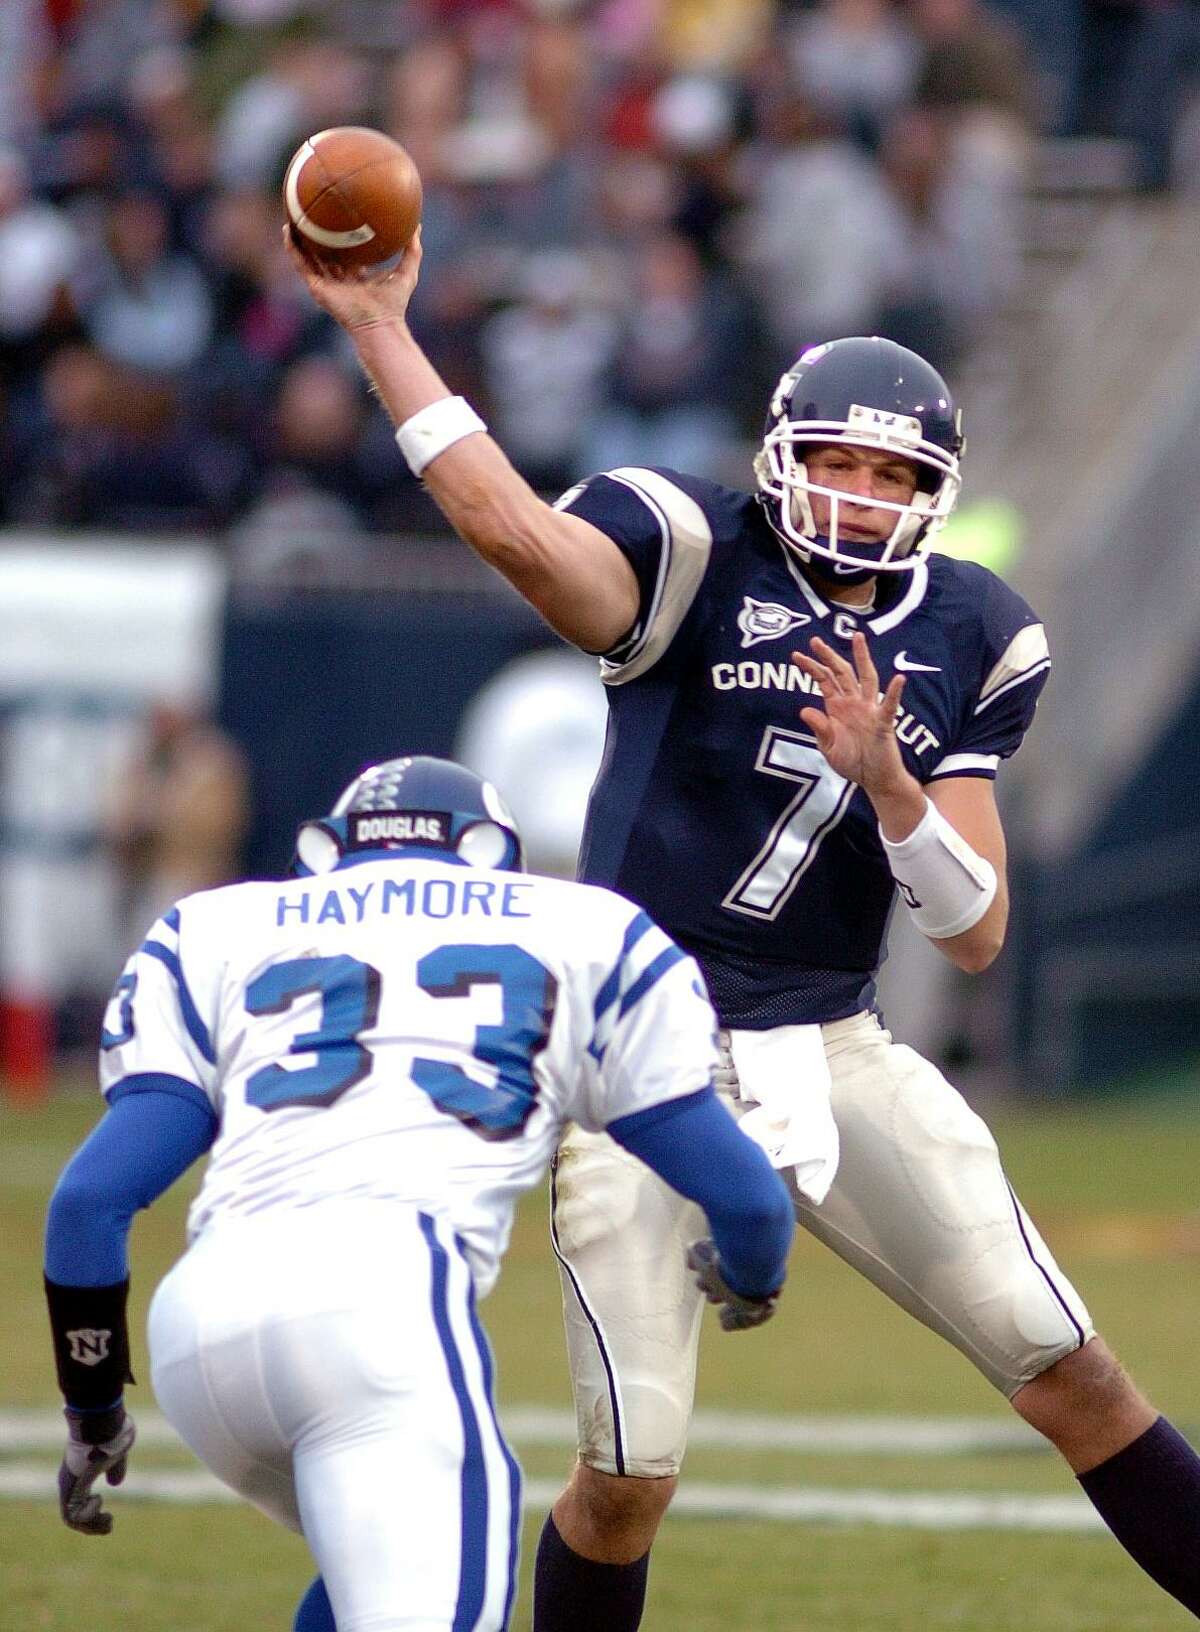 UConn quarterback Dan Orlovsky completes a pass as Buffalo’s Laron Haymore defends in a November 2004 game.